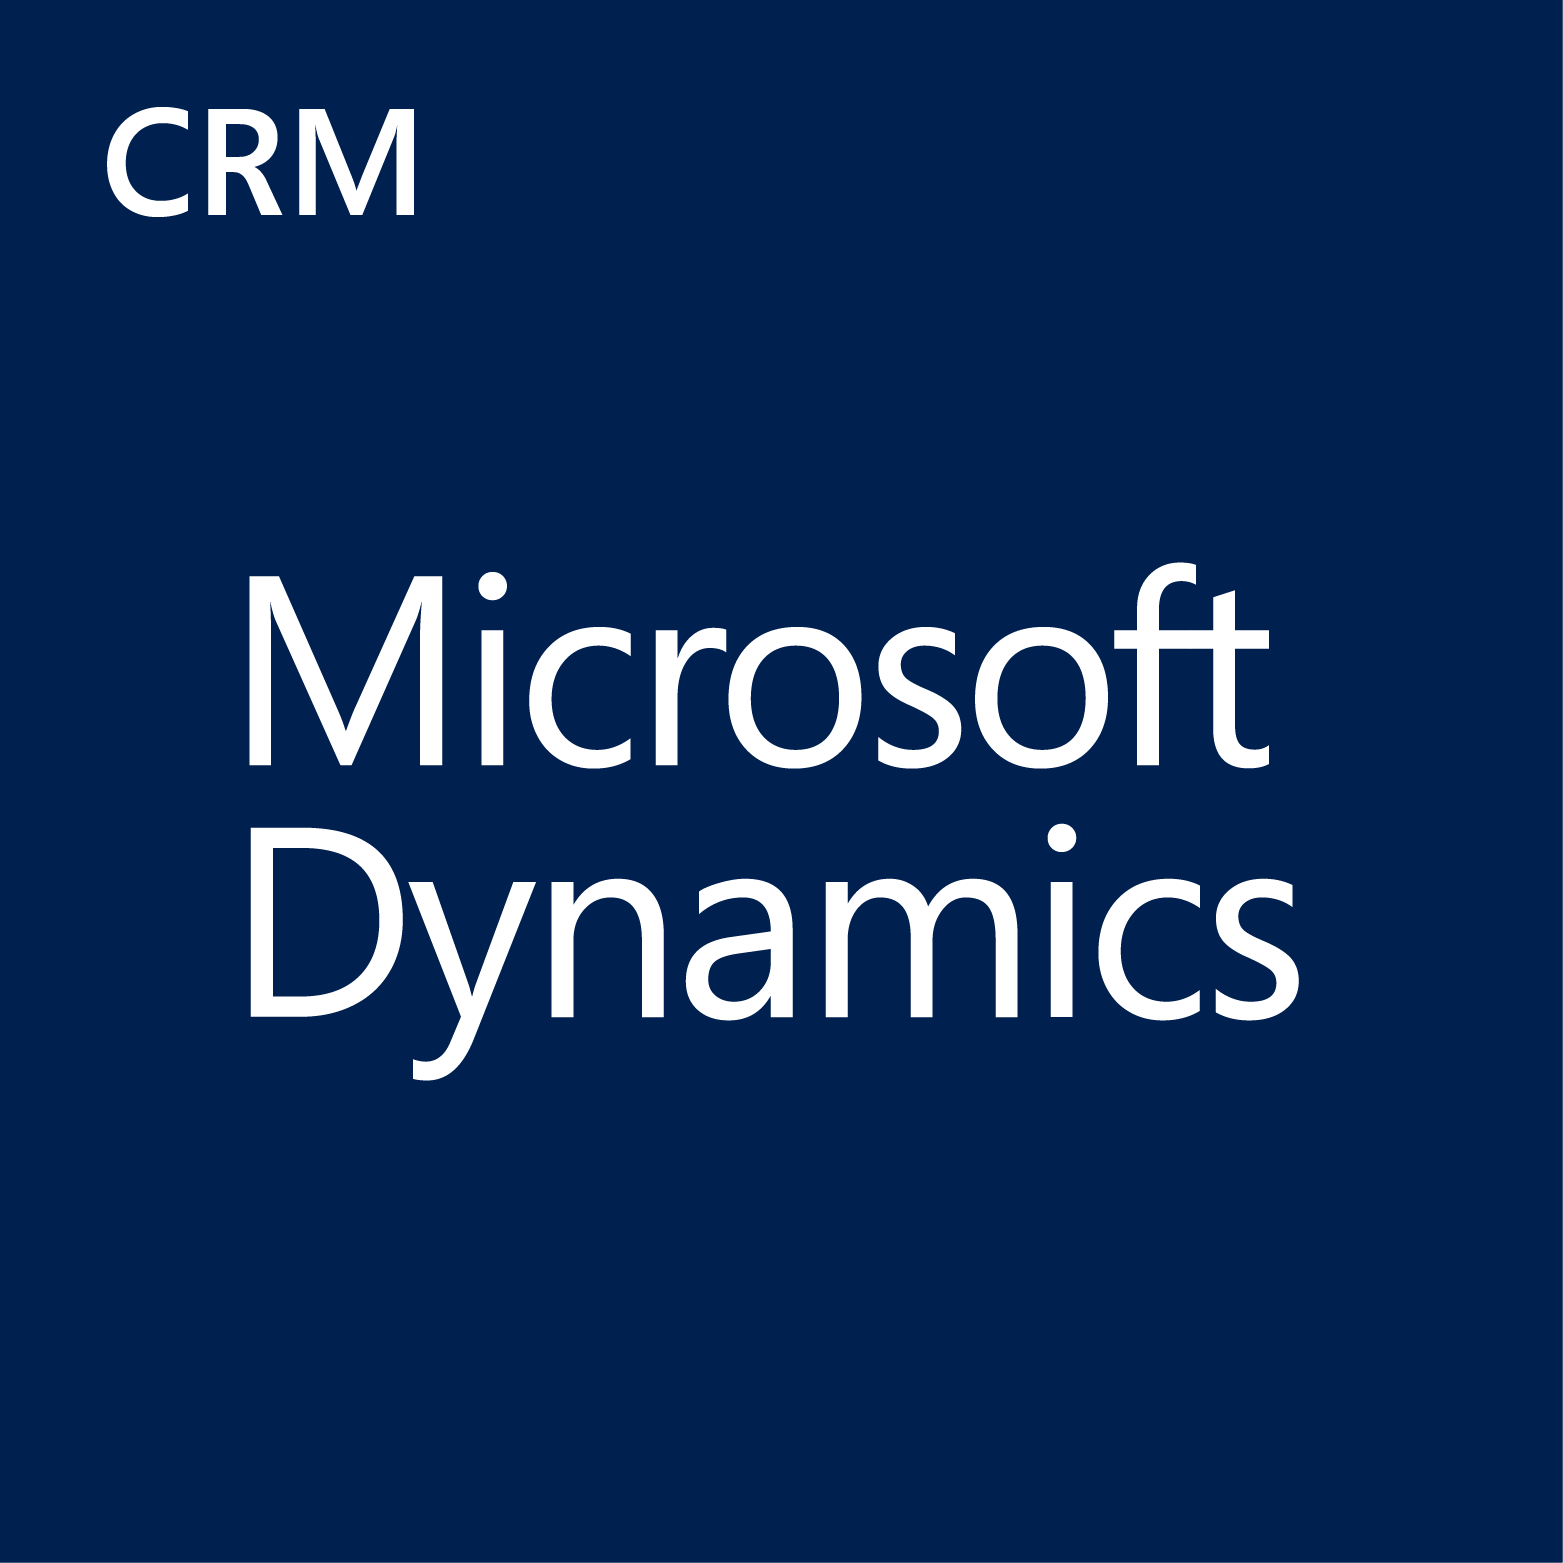 Microsoft Dynamics CRM Logo - Microsoft Dynamics CRM | Corporate Renaissance Group